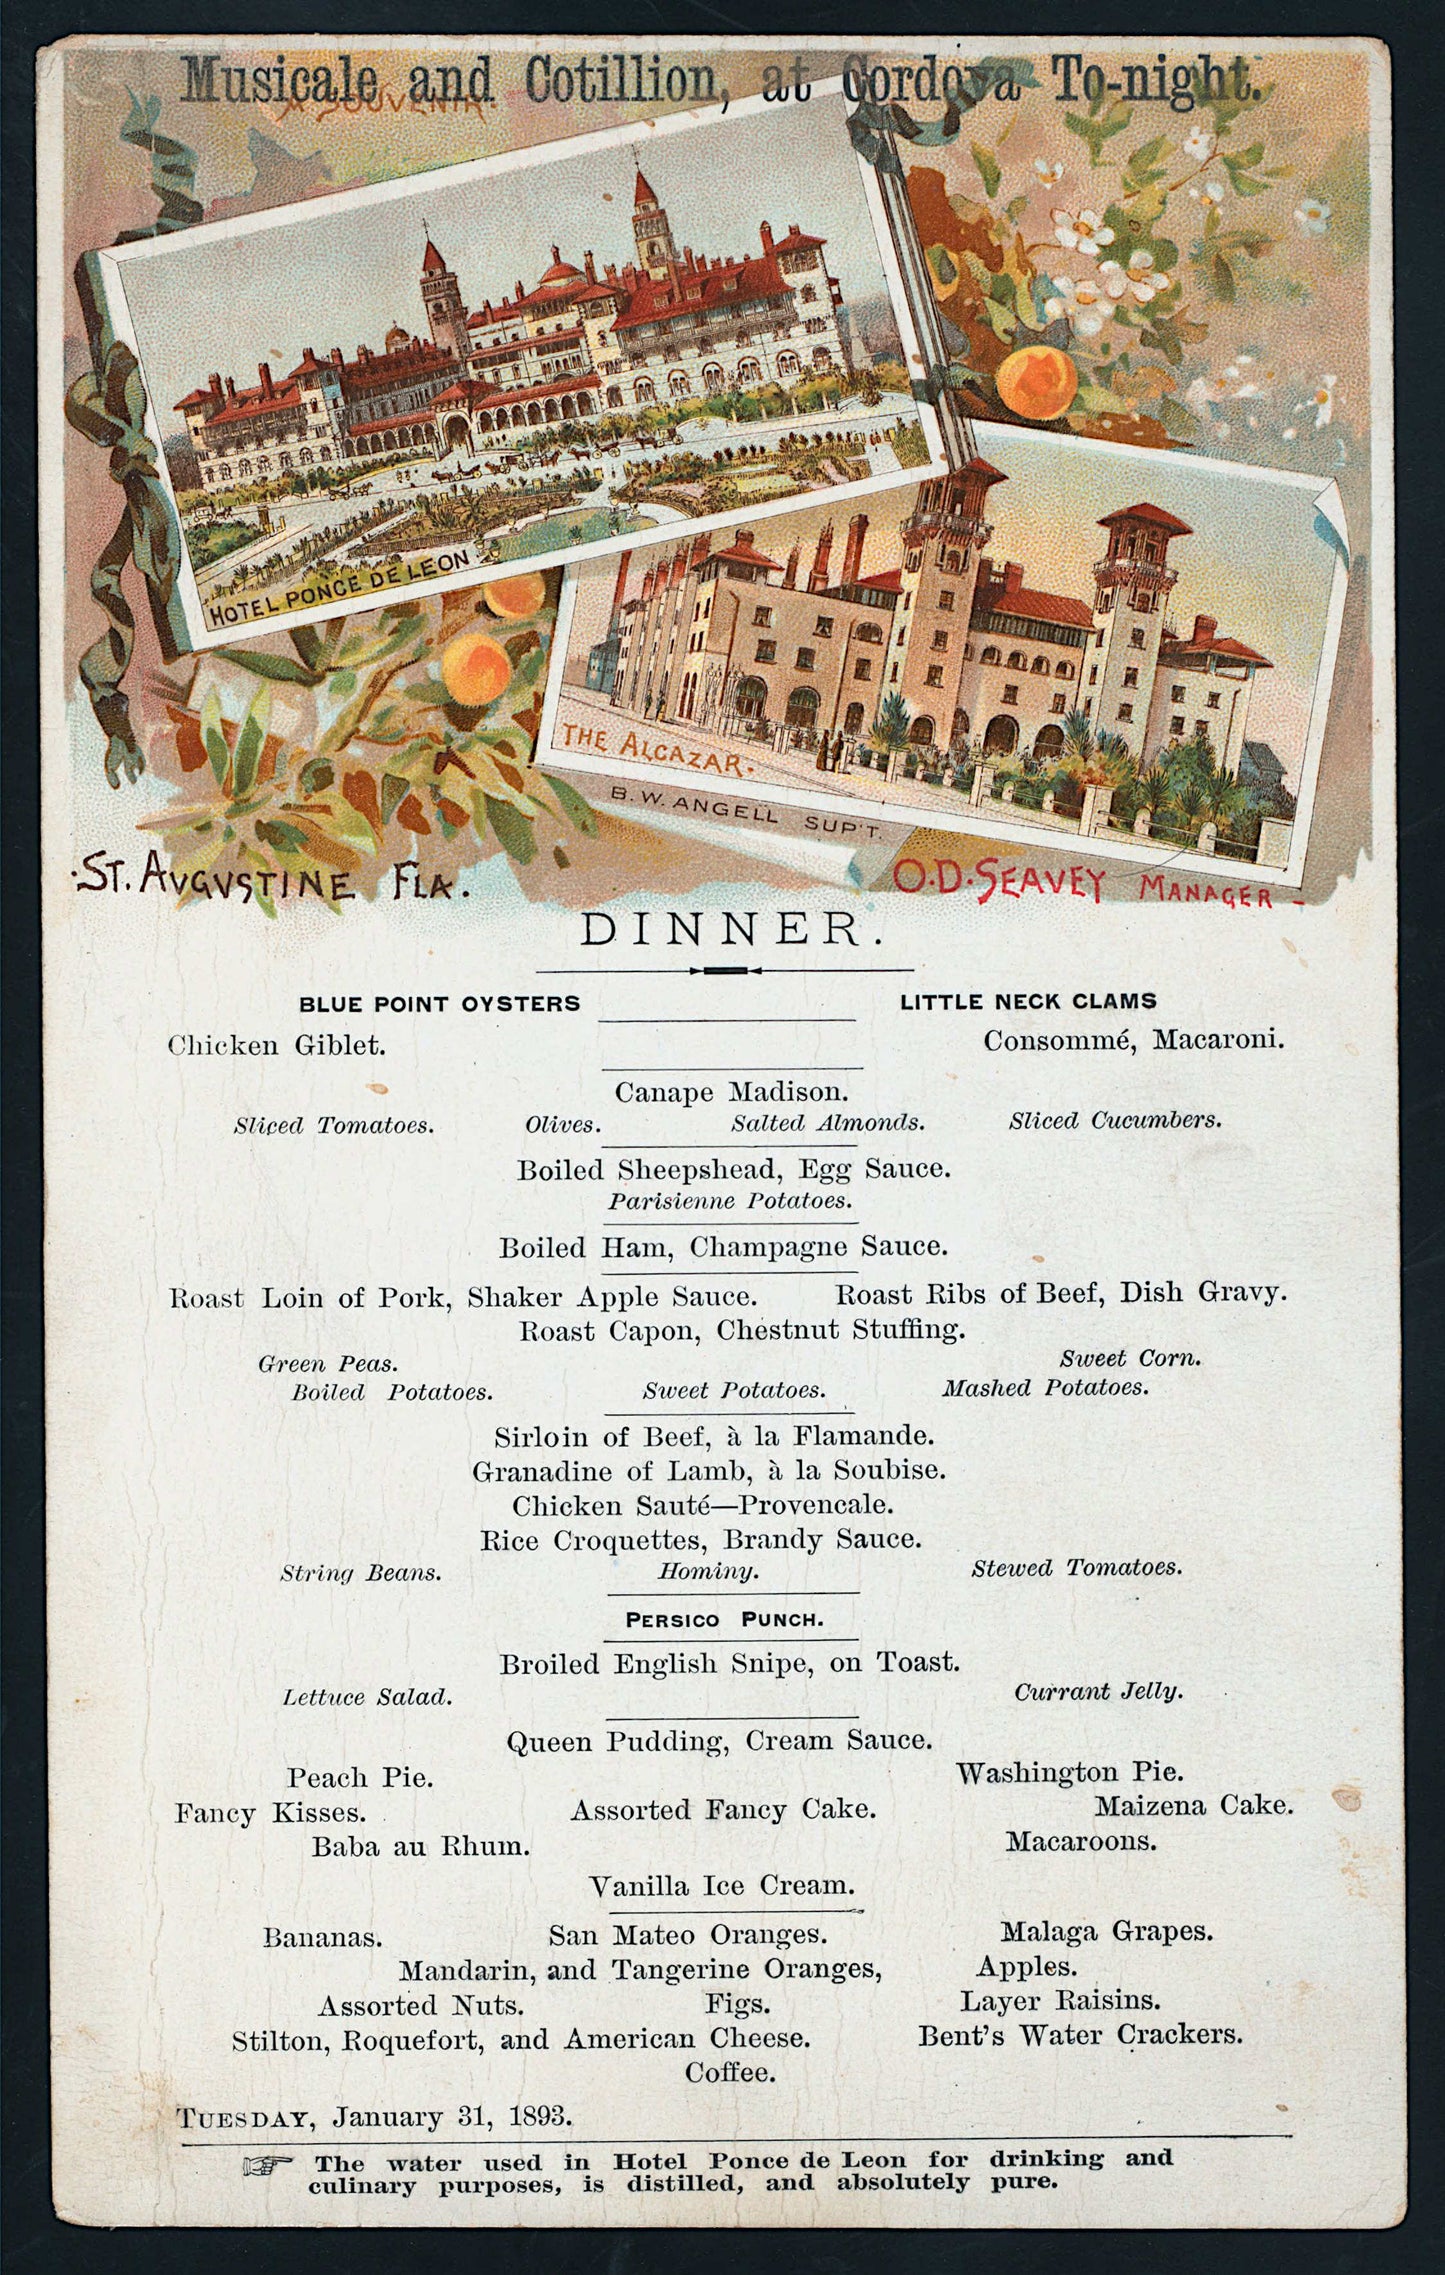 Hotel Ponce de Leon menu (dinner) from 1893 Saint Augustine.